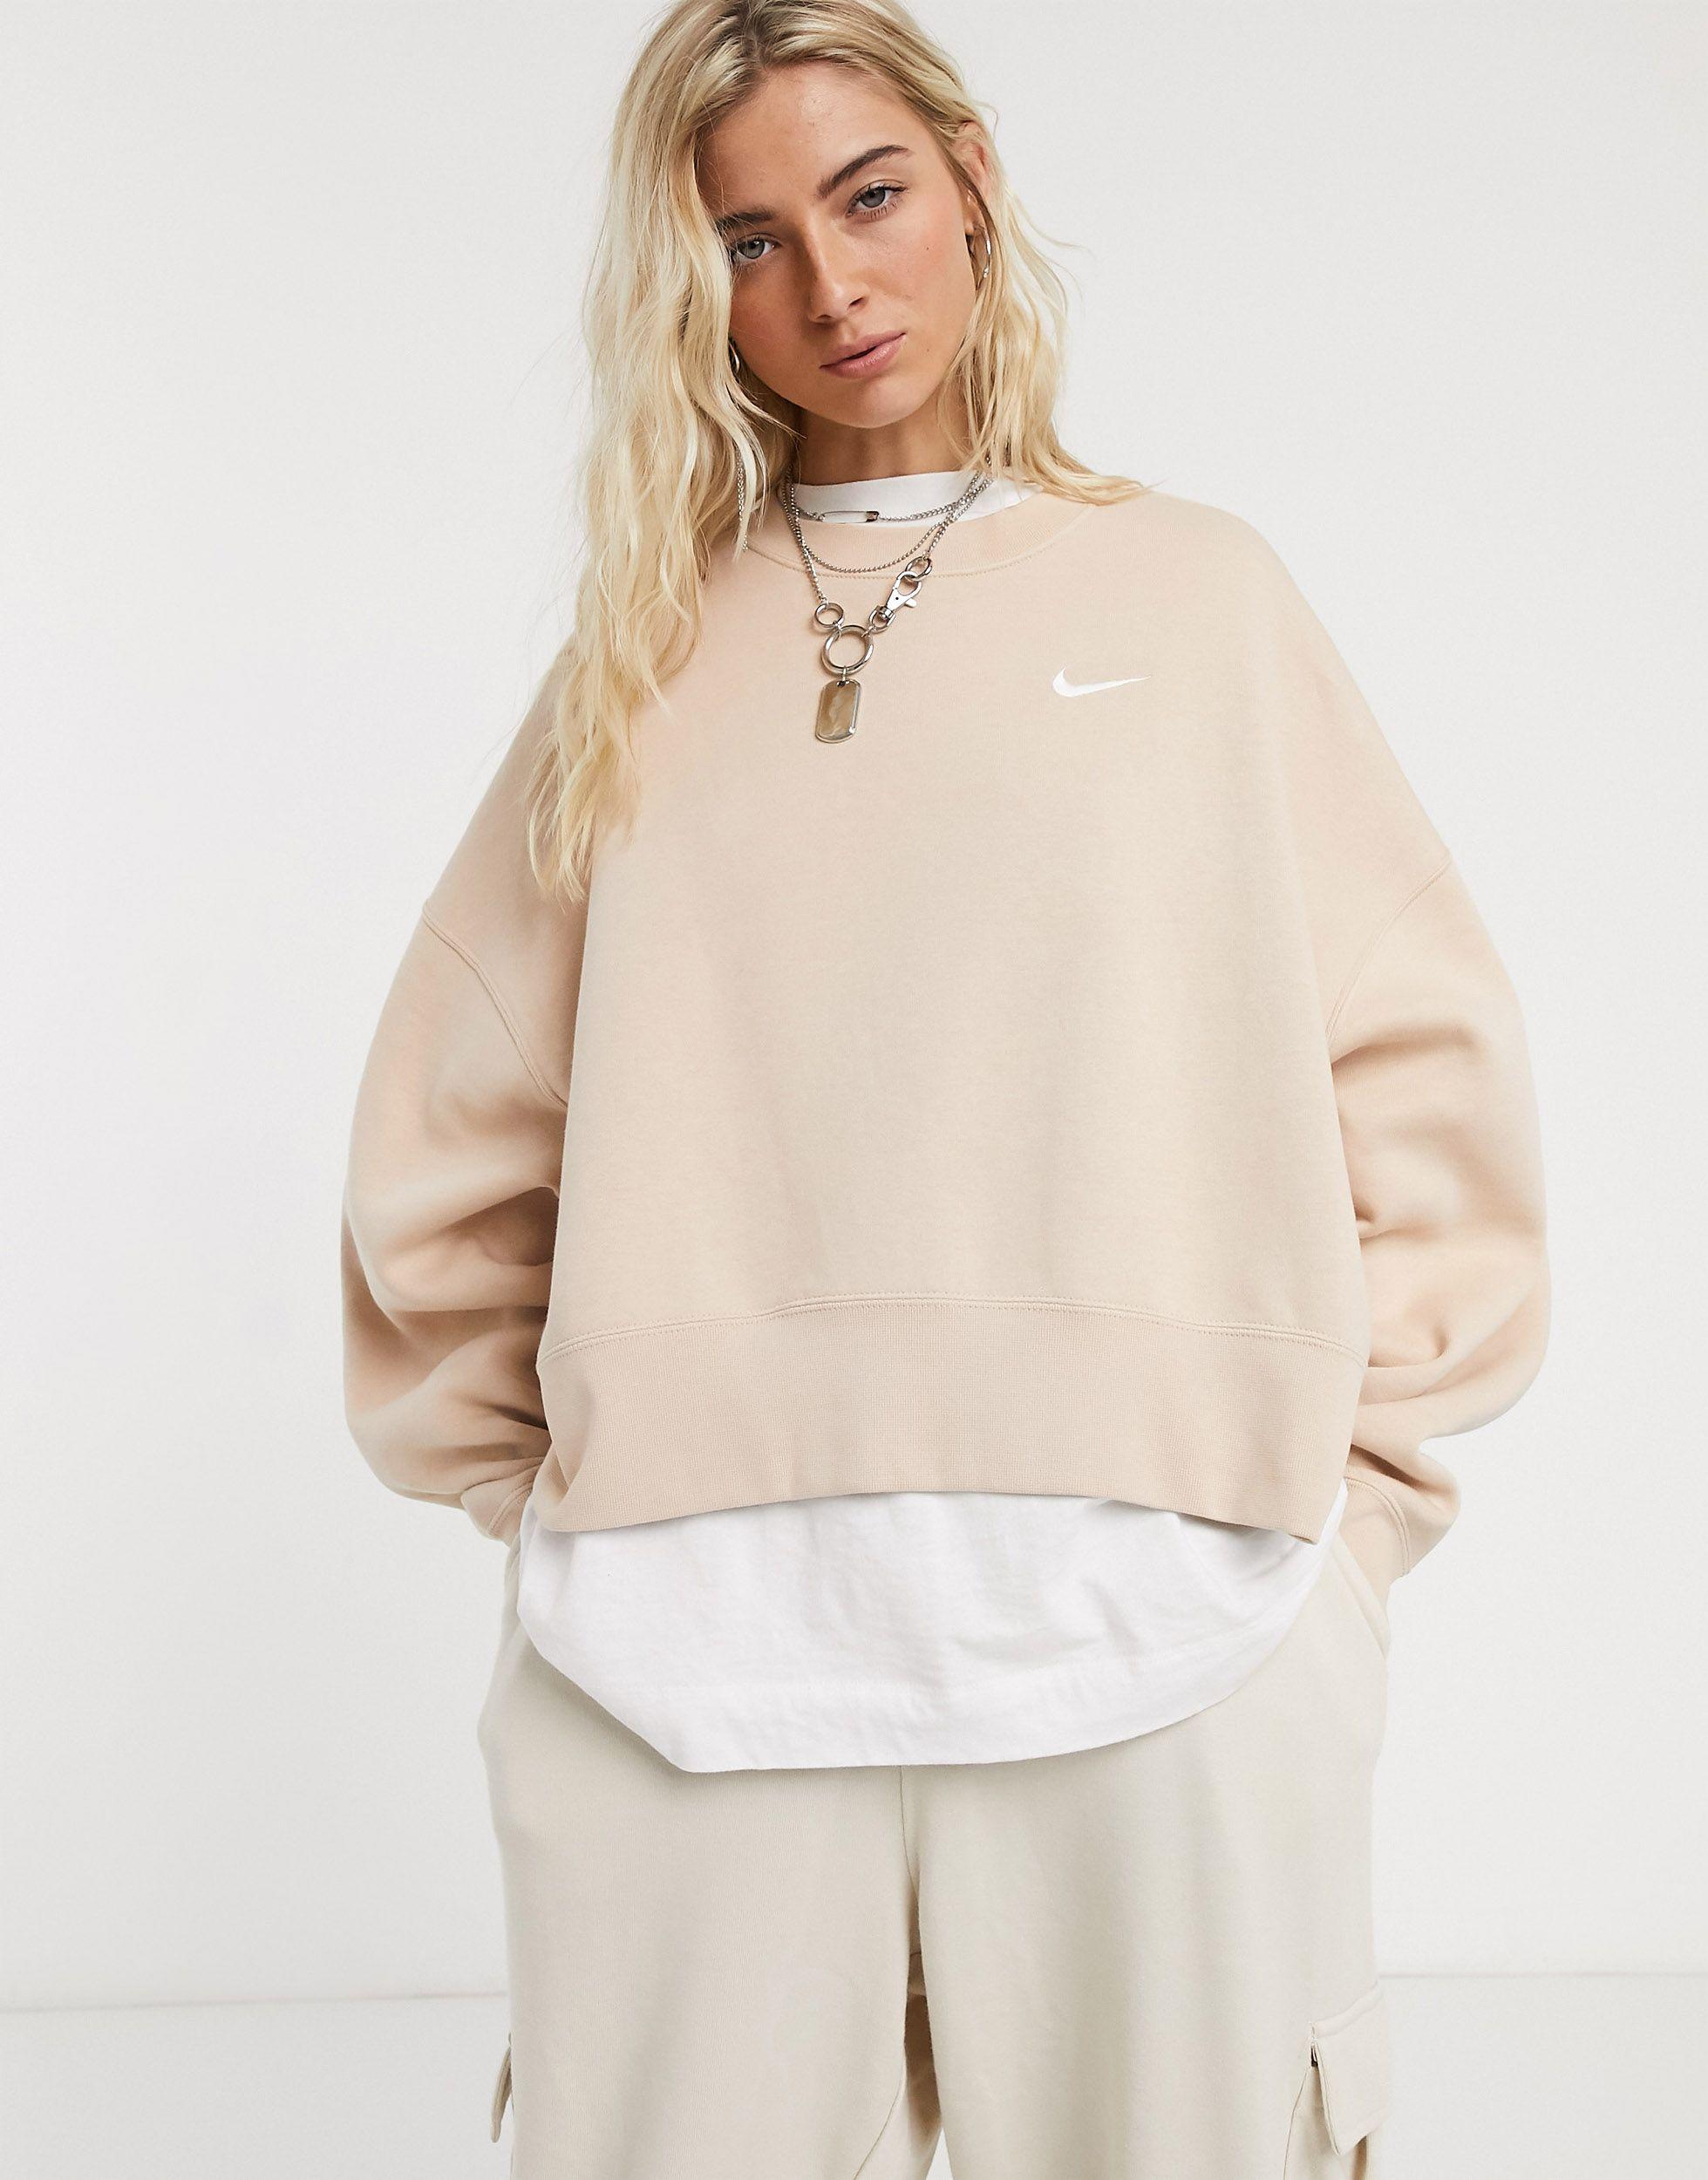 Purchase > oversized beige sweatshirt, Up to 75% OFF